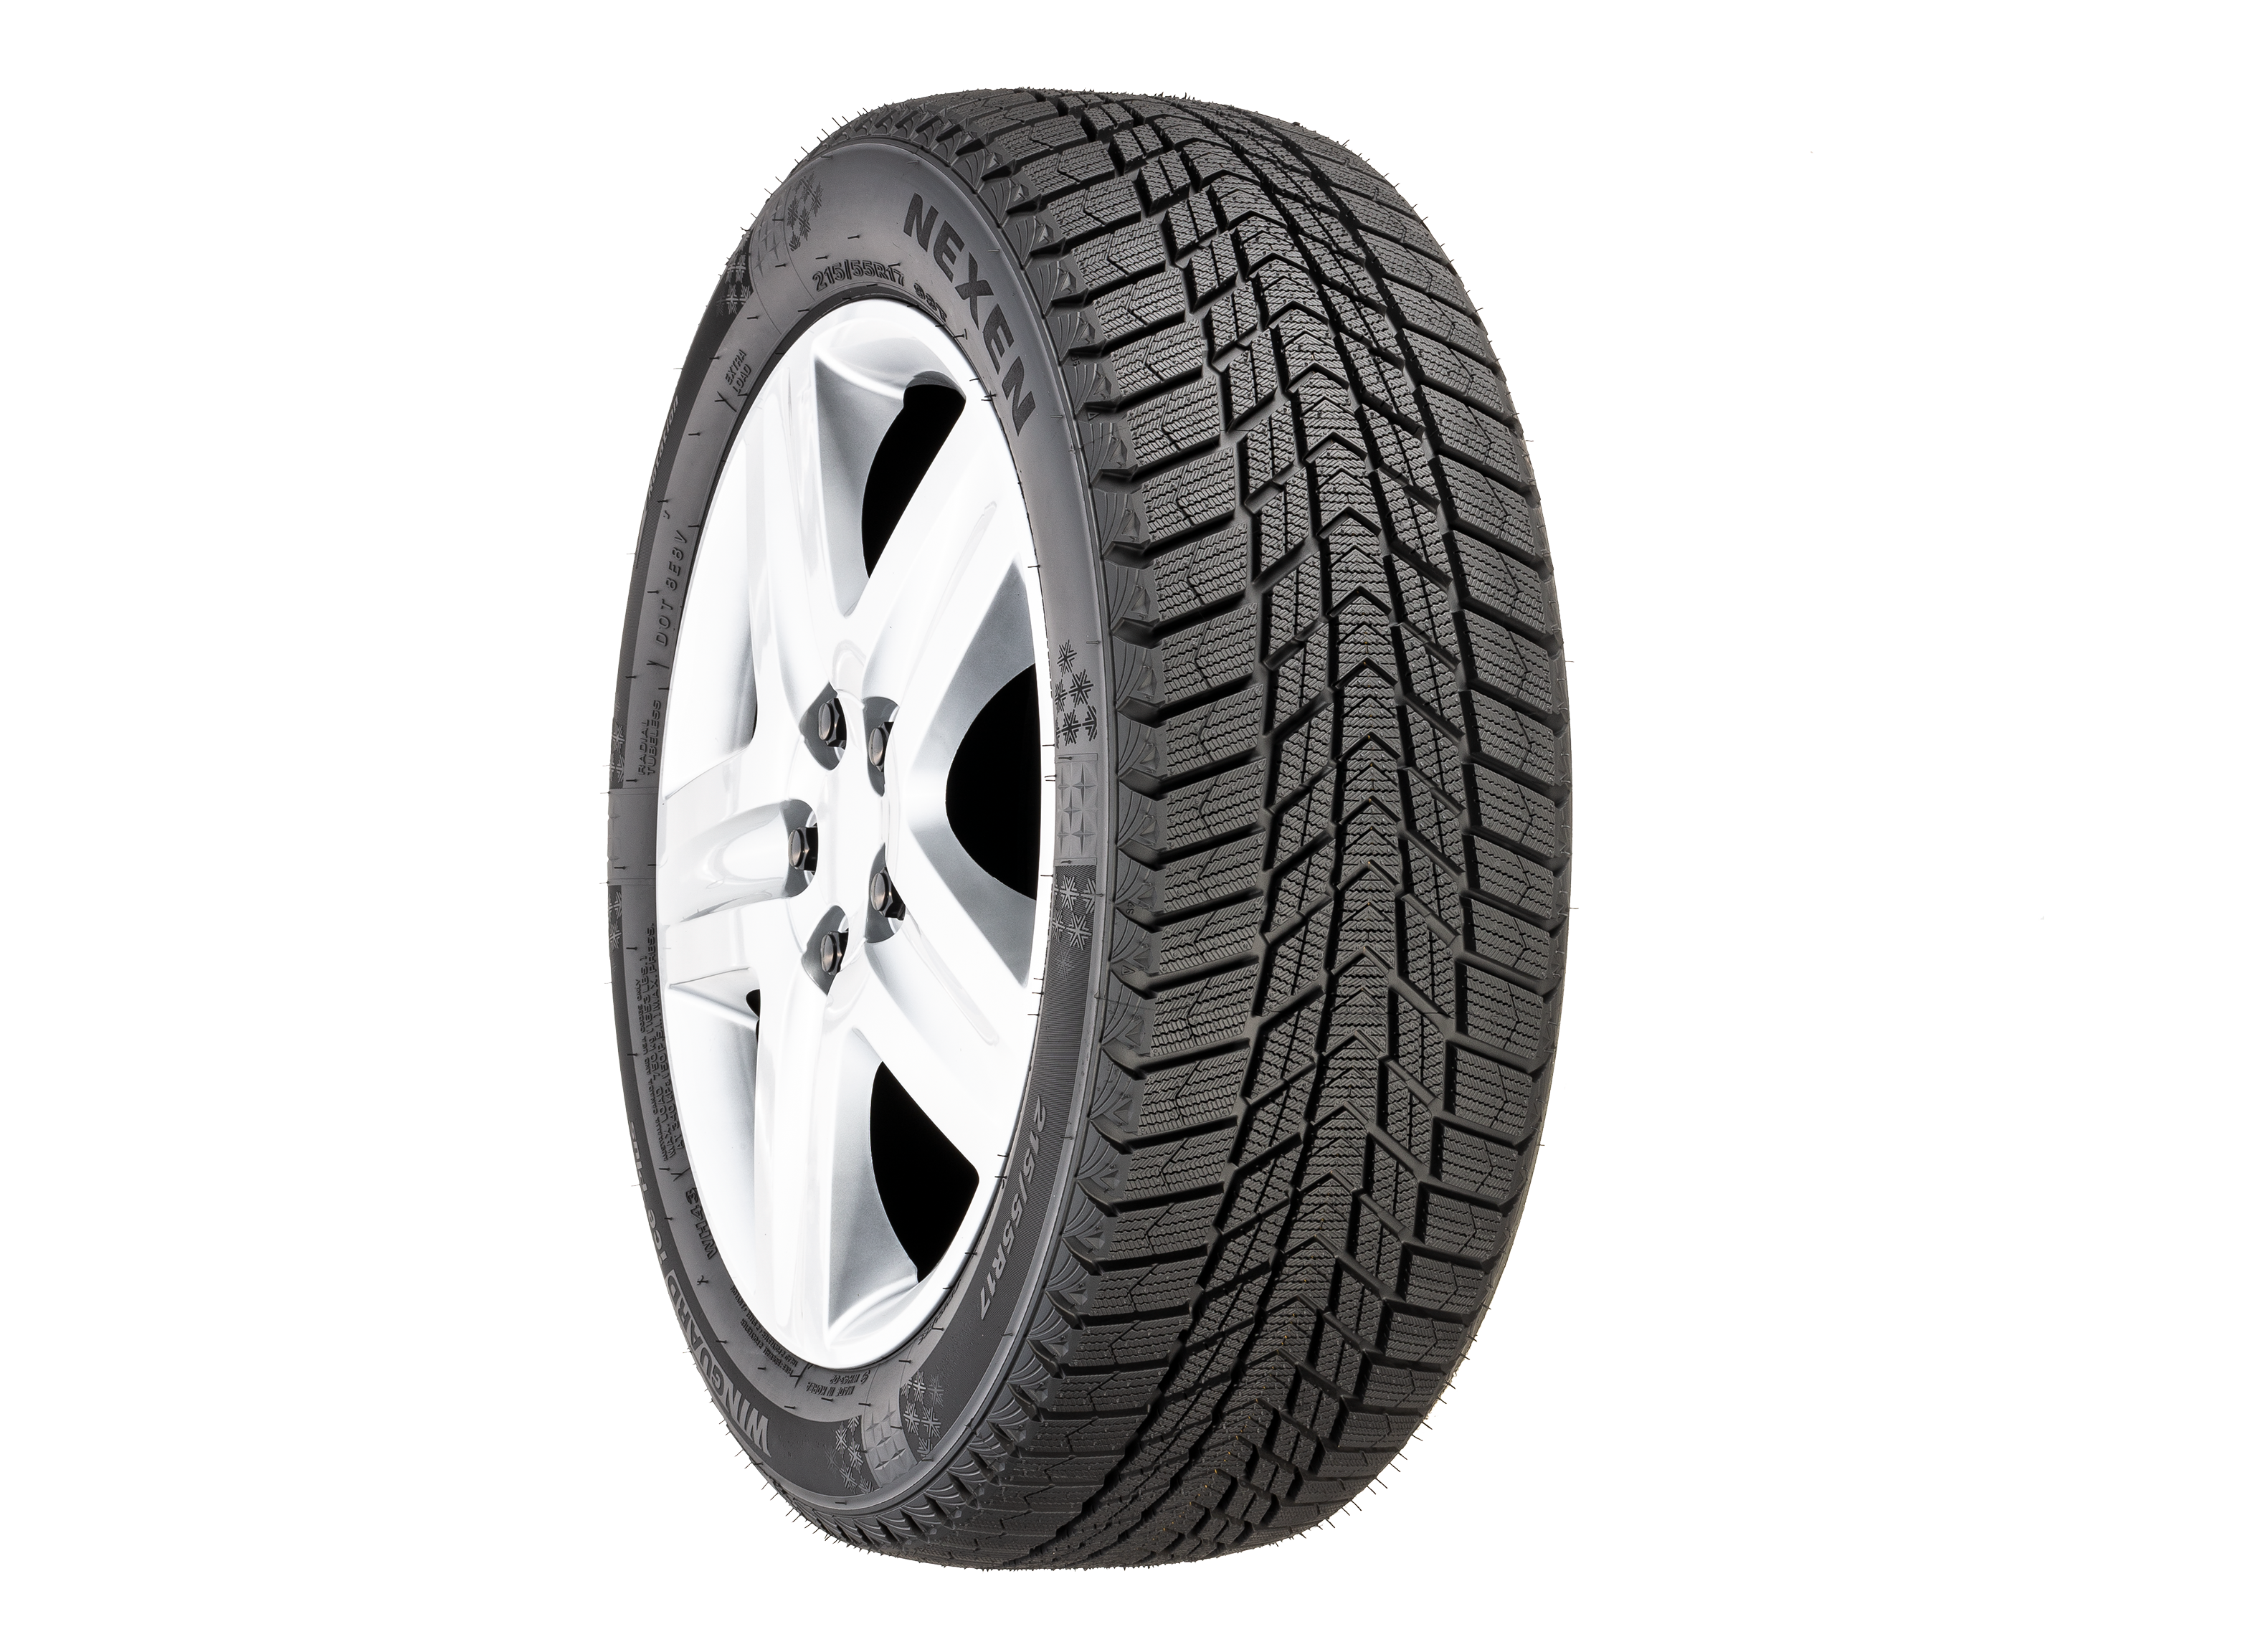 Tire Consumer ice Reports Review Nexen Winguard Plus -